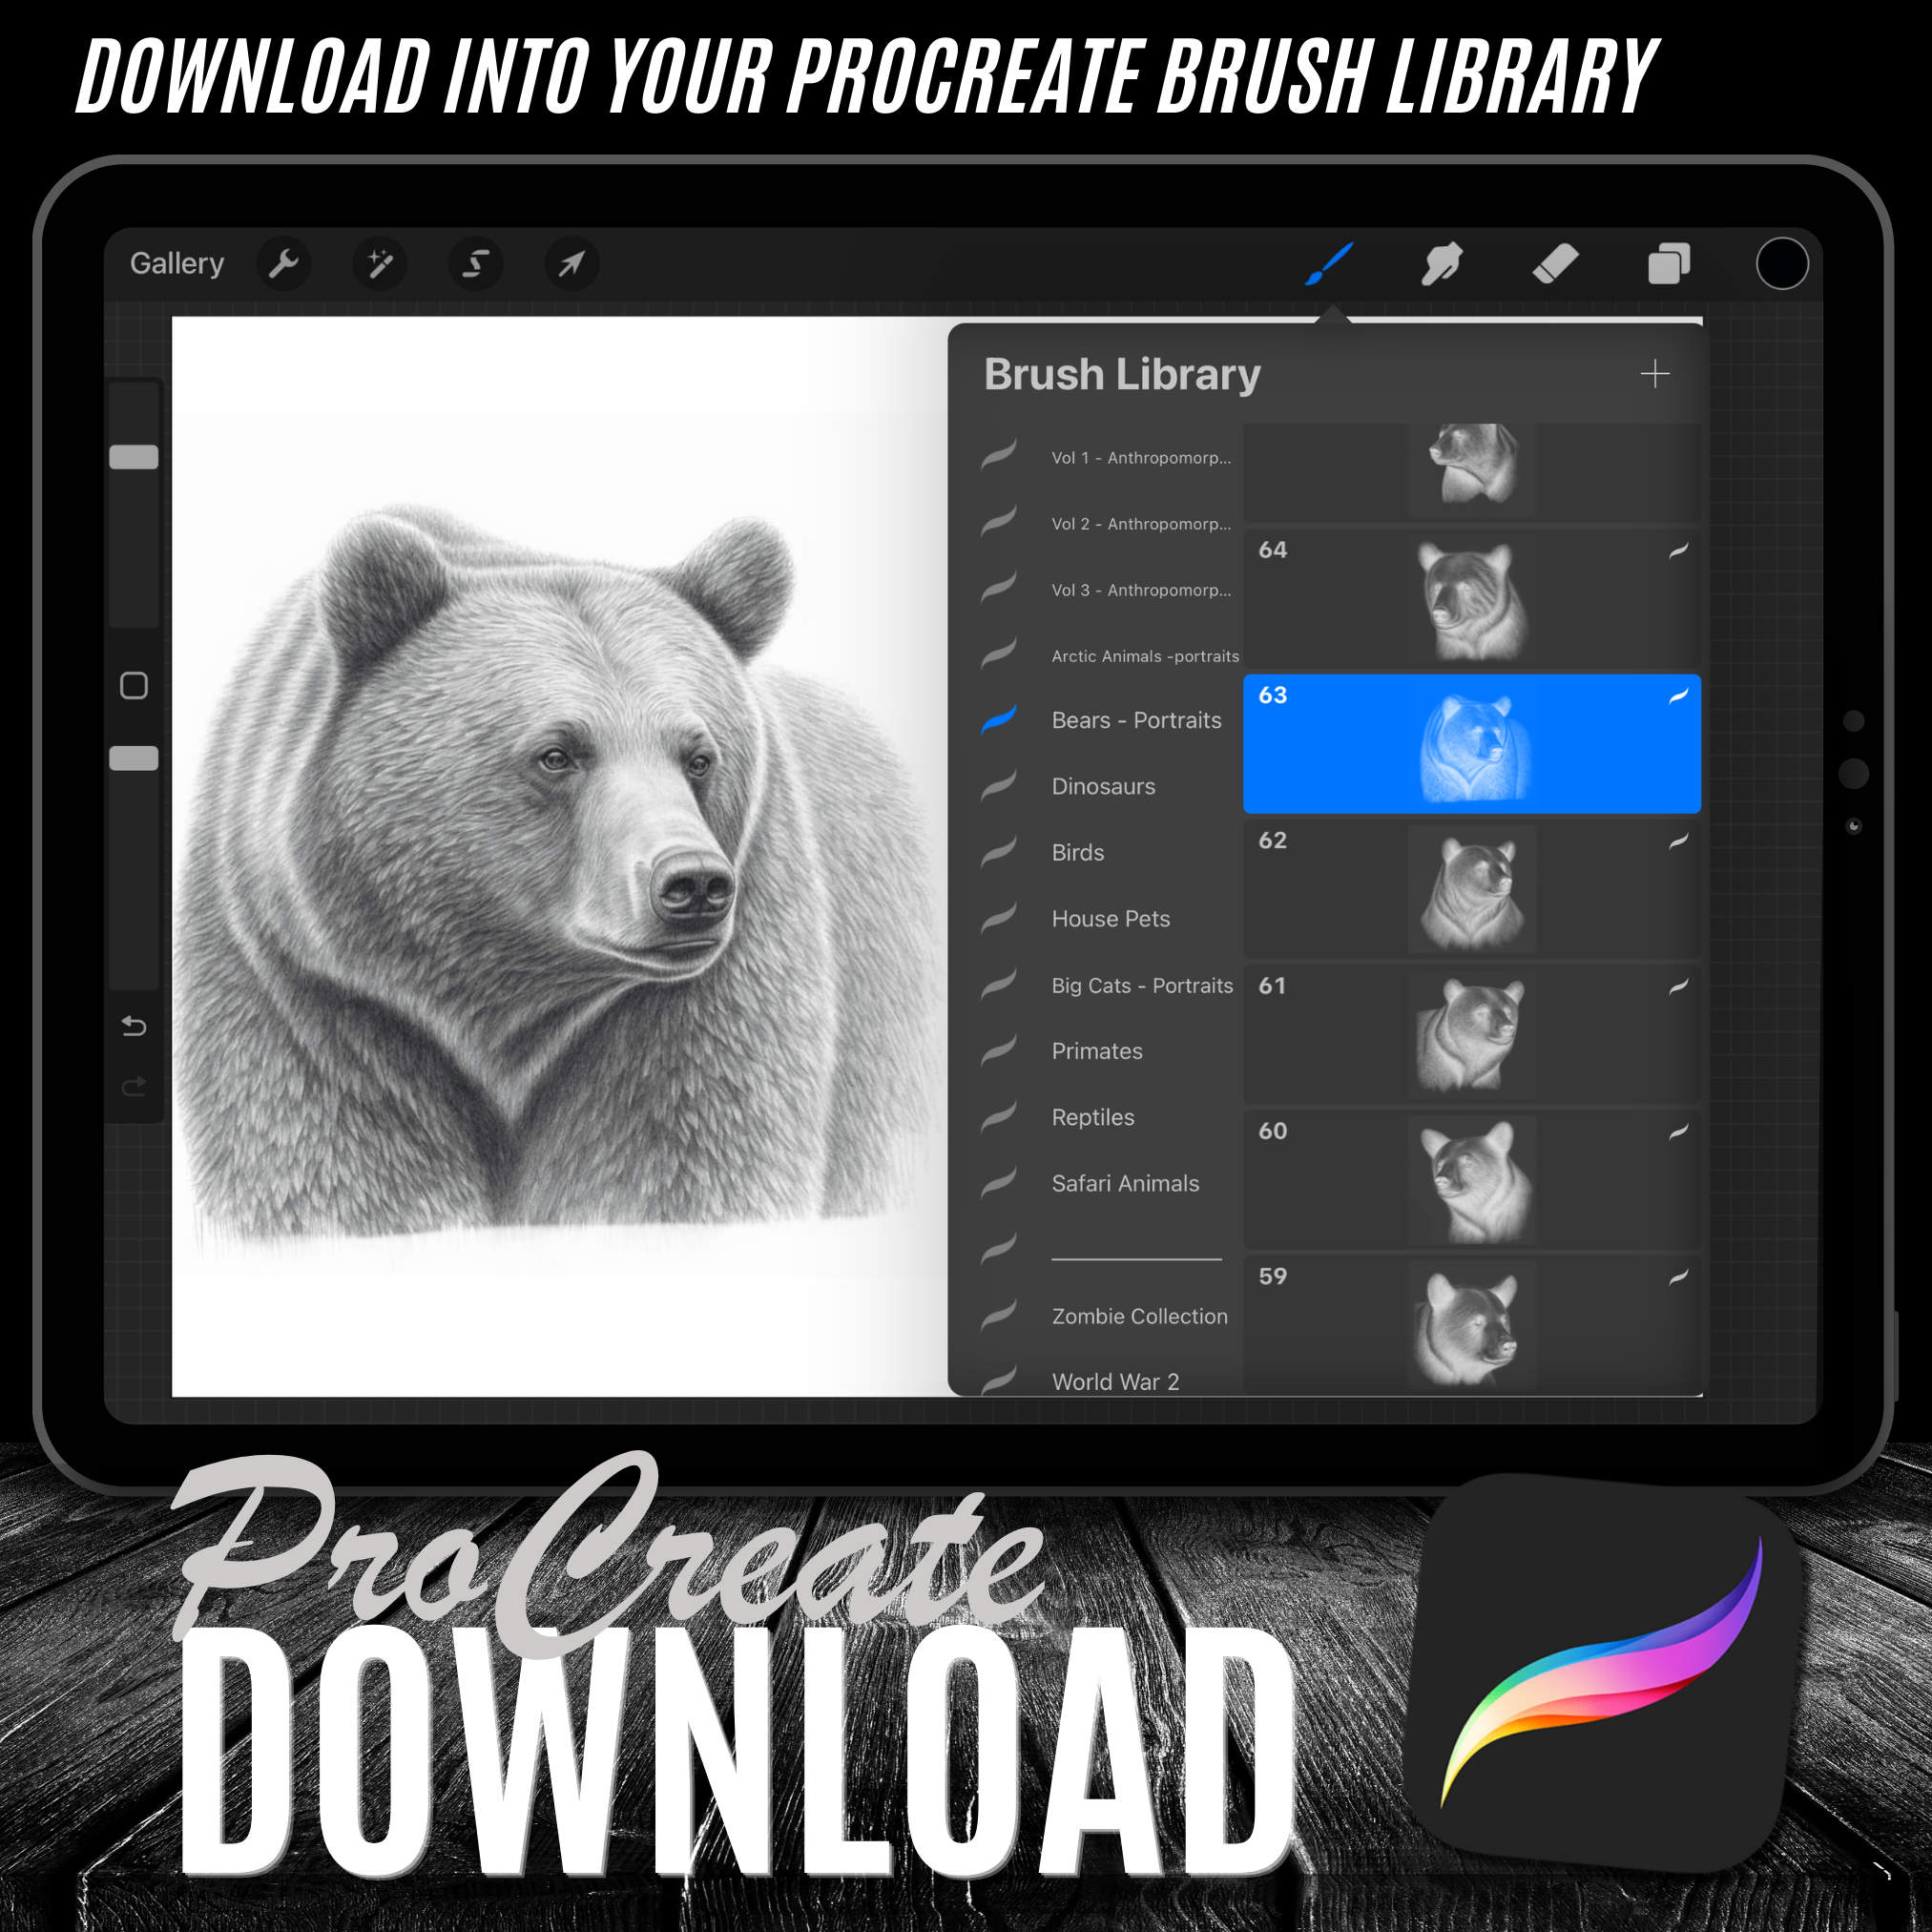 Bears Digital Reference Design Collection: 100 Procreate & Sketchbook Images